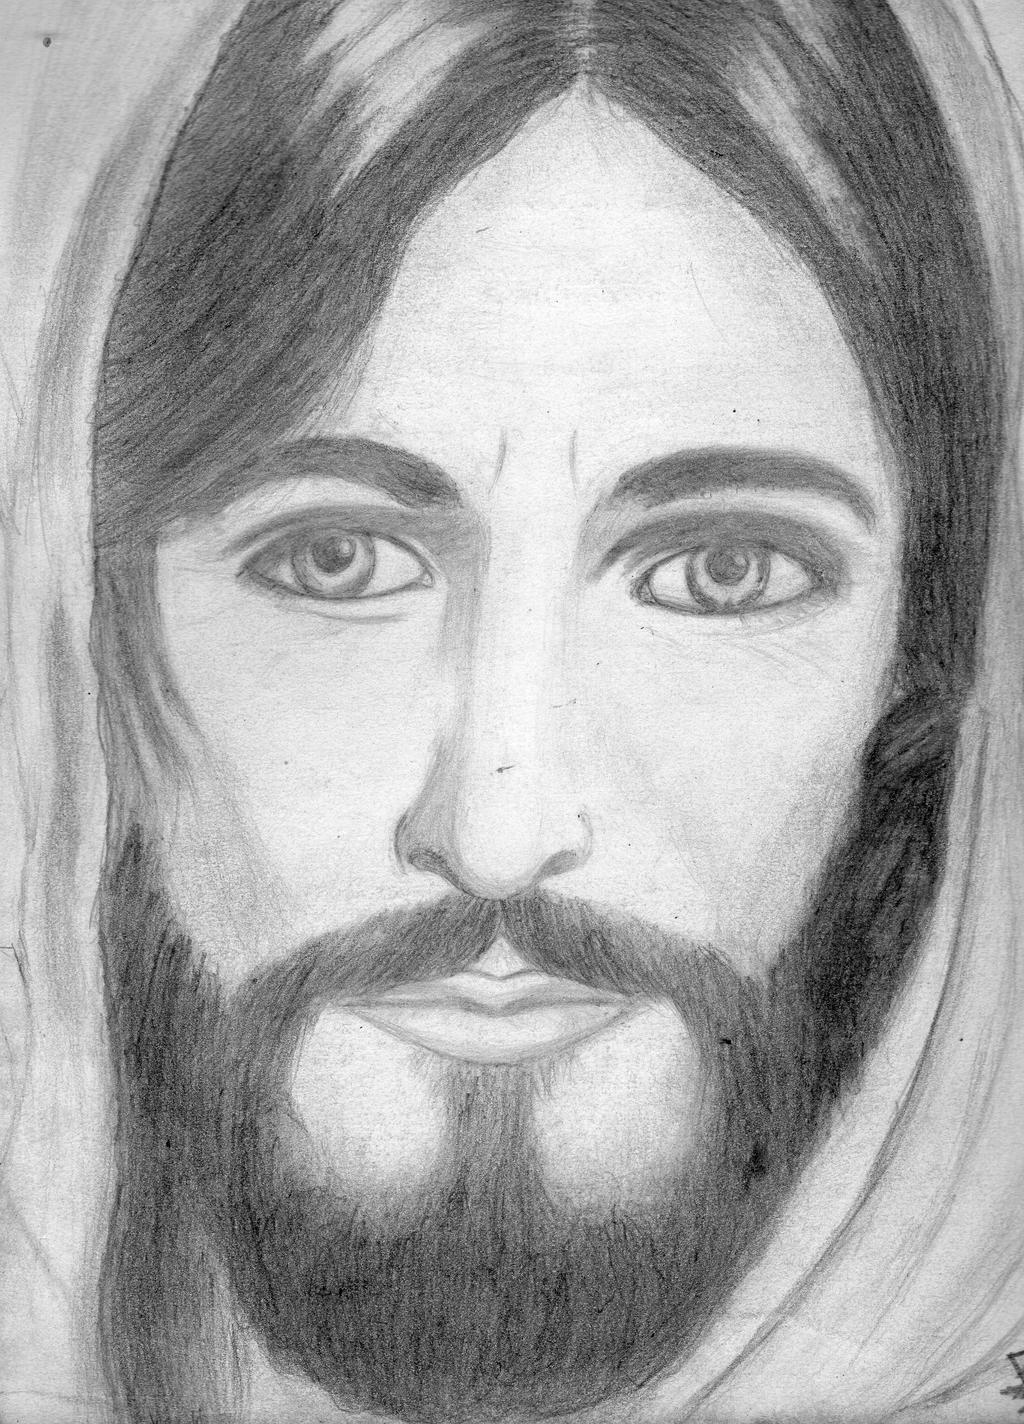 A Jesus Christ draw - Un dibujo de Jesuscristo by PacoArroyo on DeviantArt